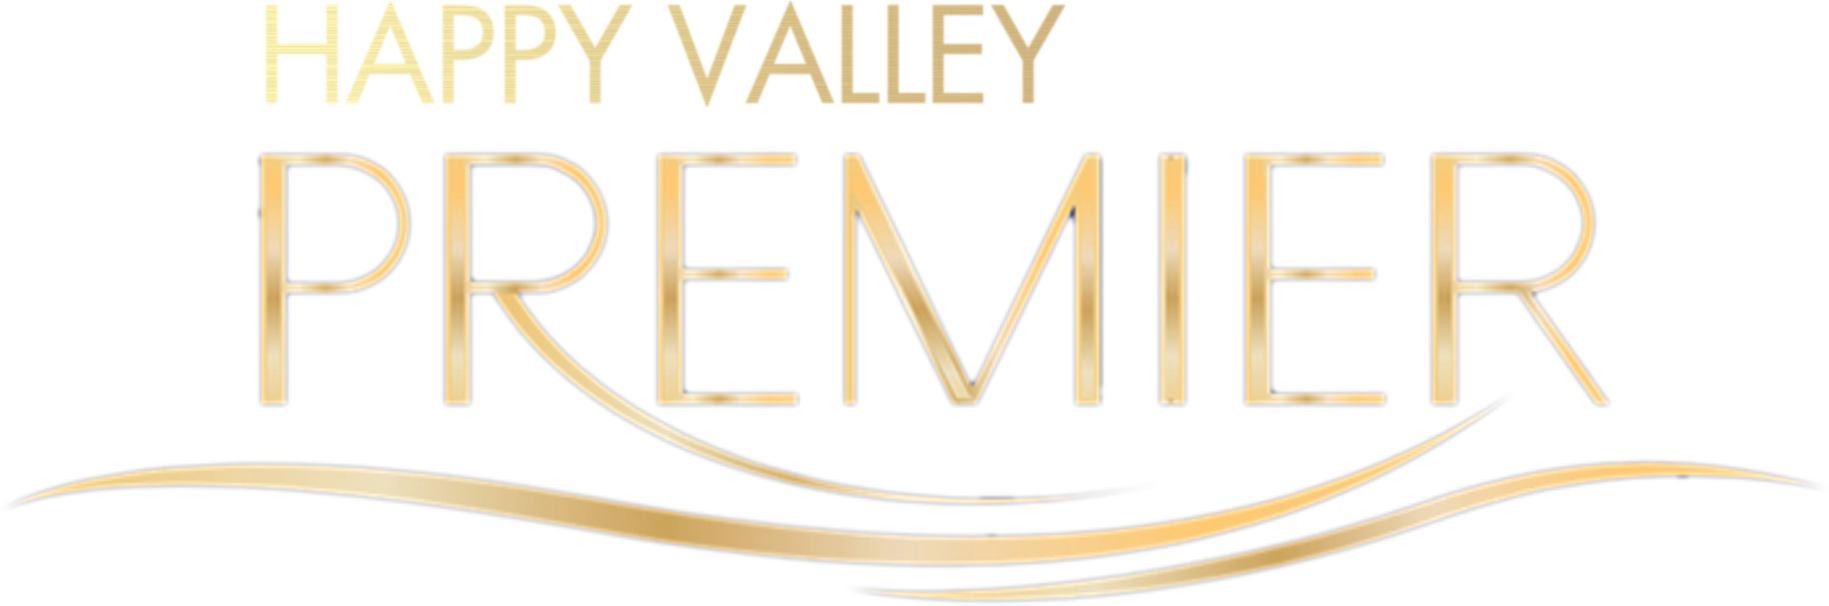 Happy Valley Premier